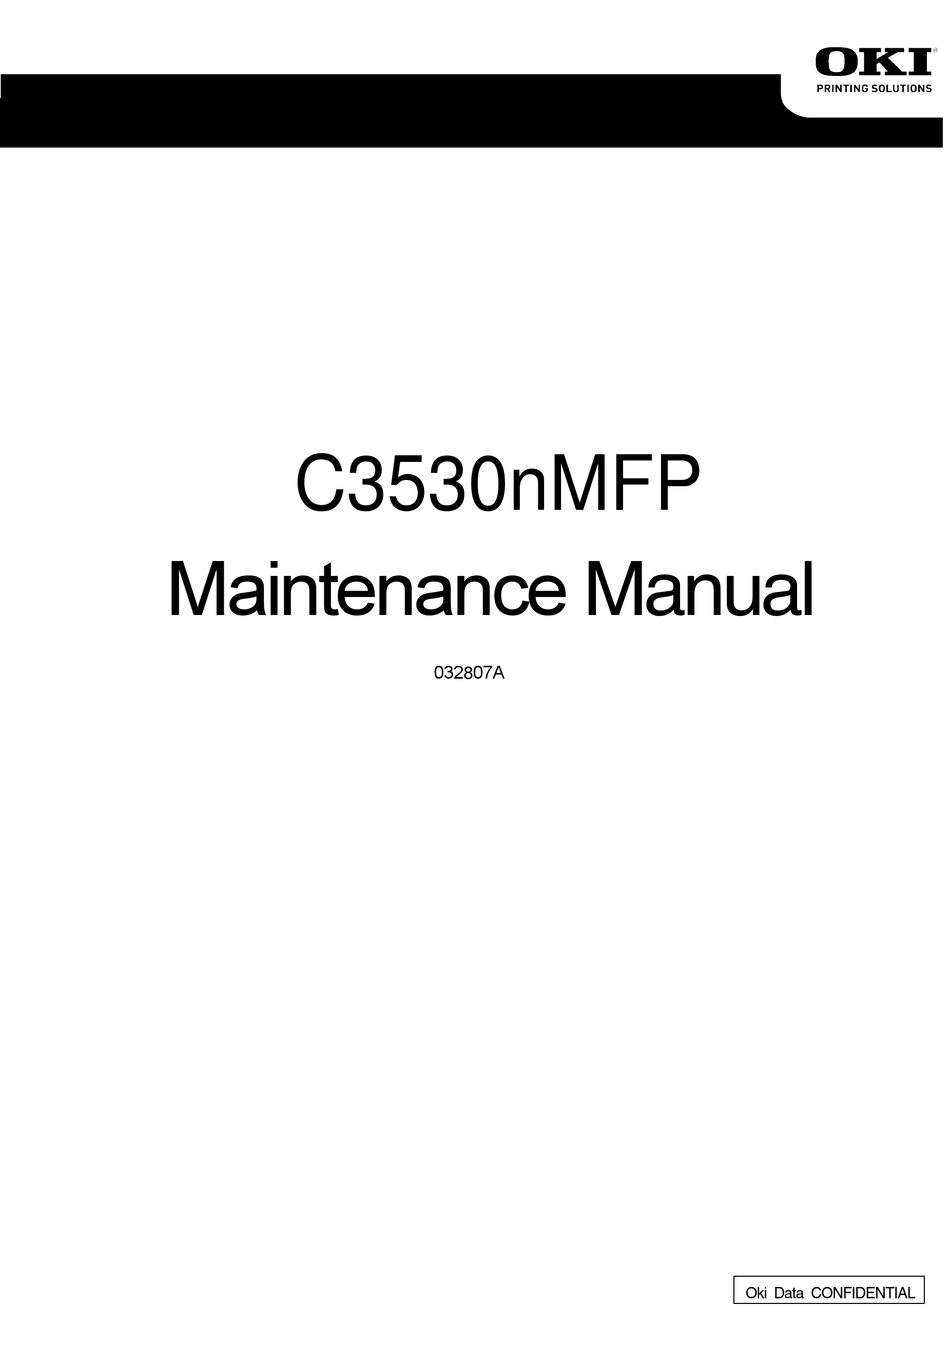 matchmaker Geography Dempsey OKI C3530NMFP MAINTENANCE MANUAL Pdf Download | ManualsLib